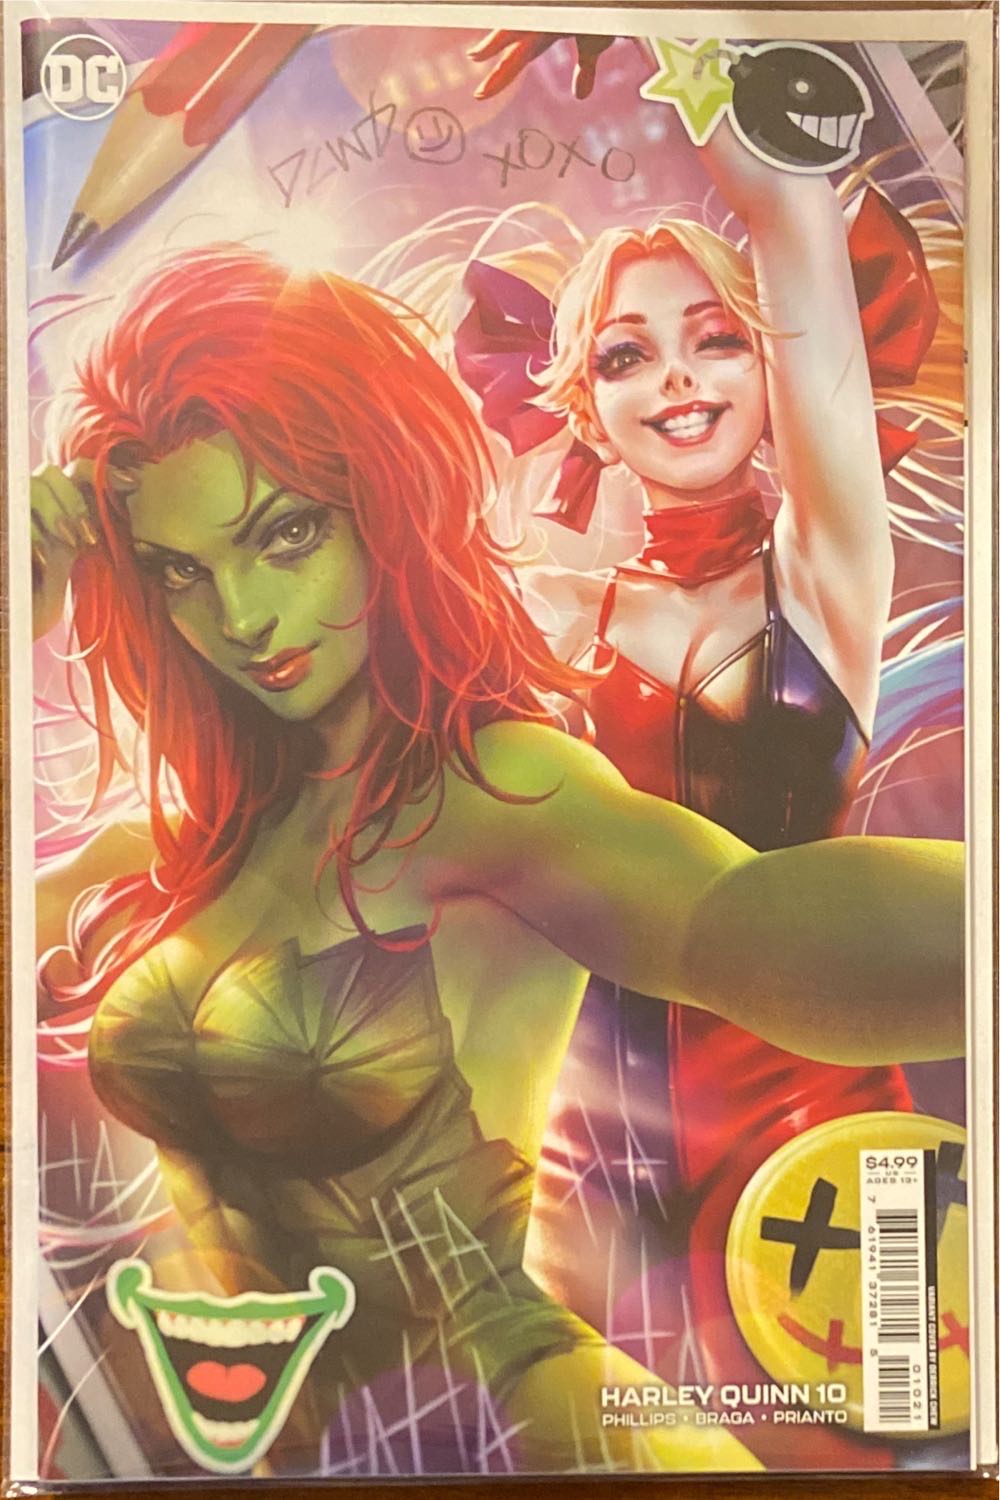 Harley Quinn Vol 4 - DC Comics (23 - Oct 2022) comic book collectible [Barcode 76194137281502321] - Main Image 2